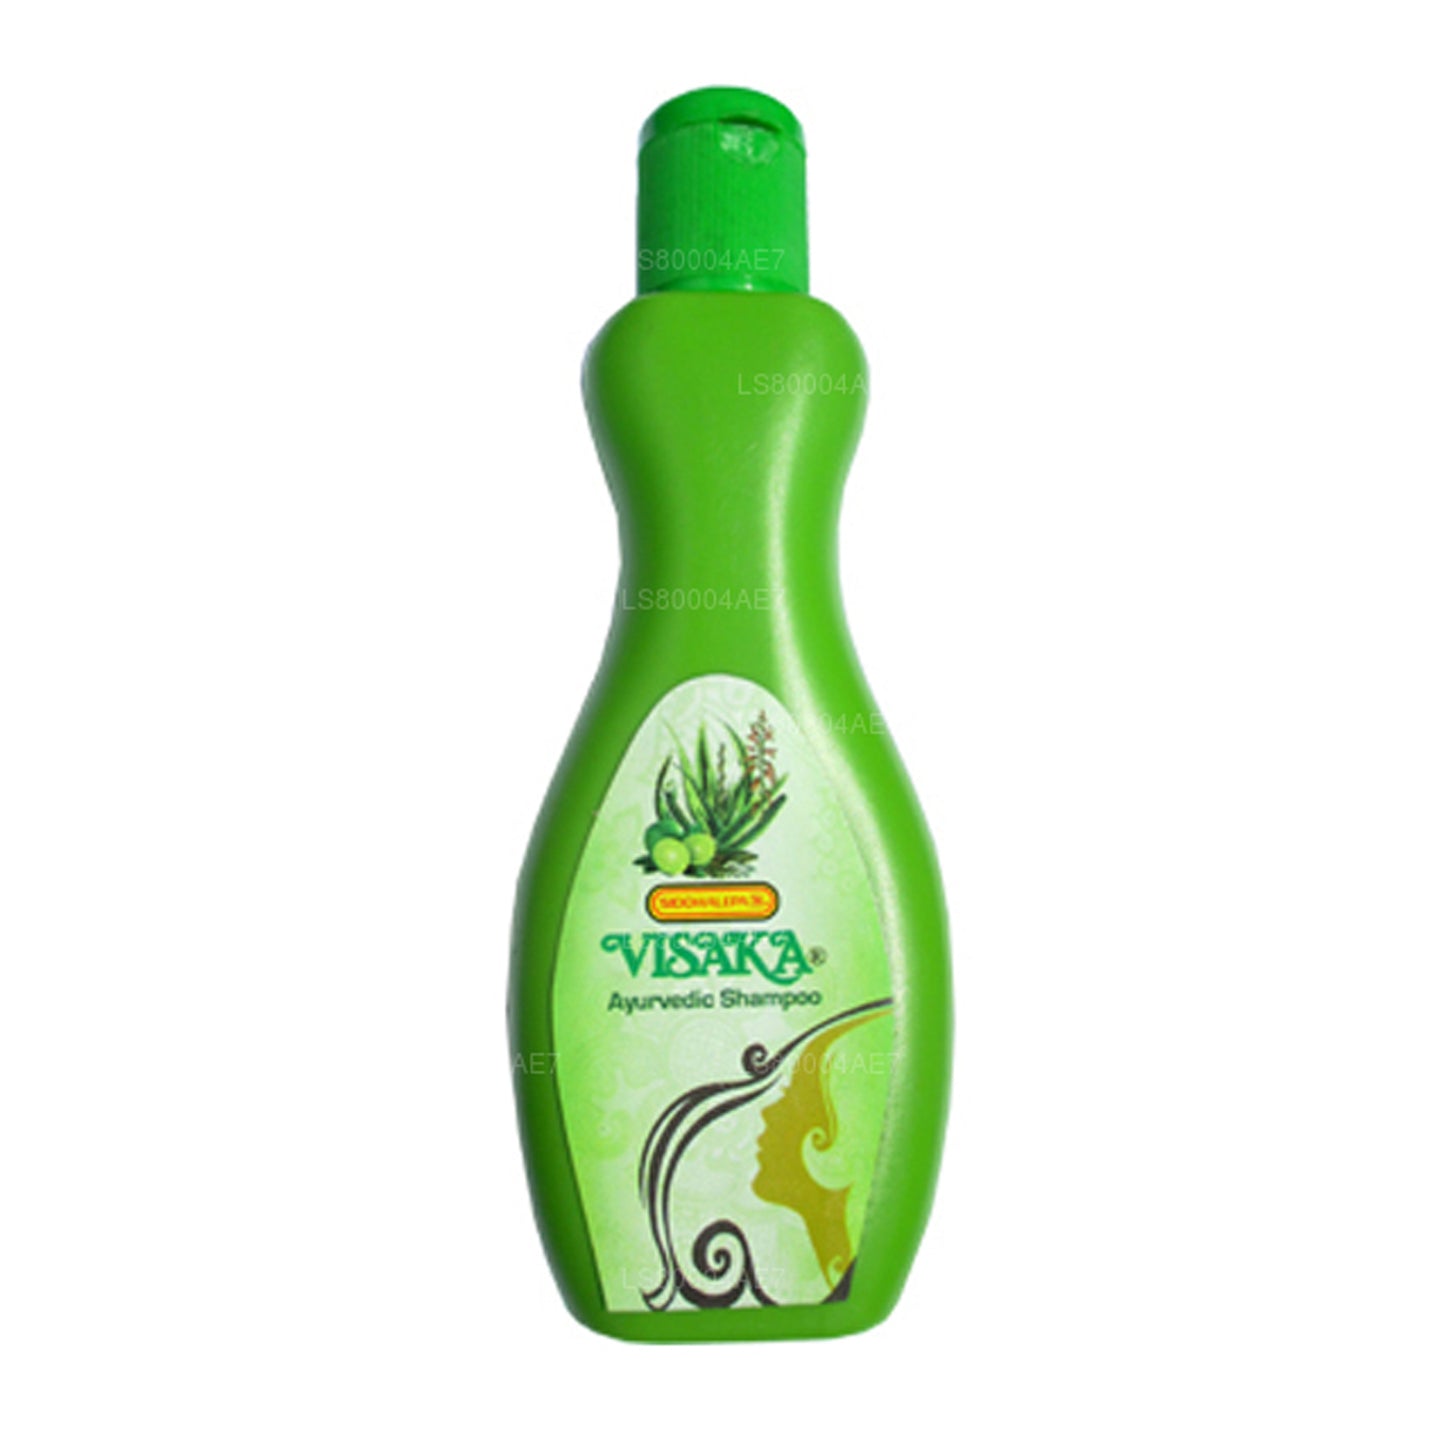 Siddhalepa Visaka ayurvedisk shampoo (100 ml)